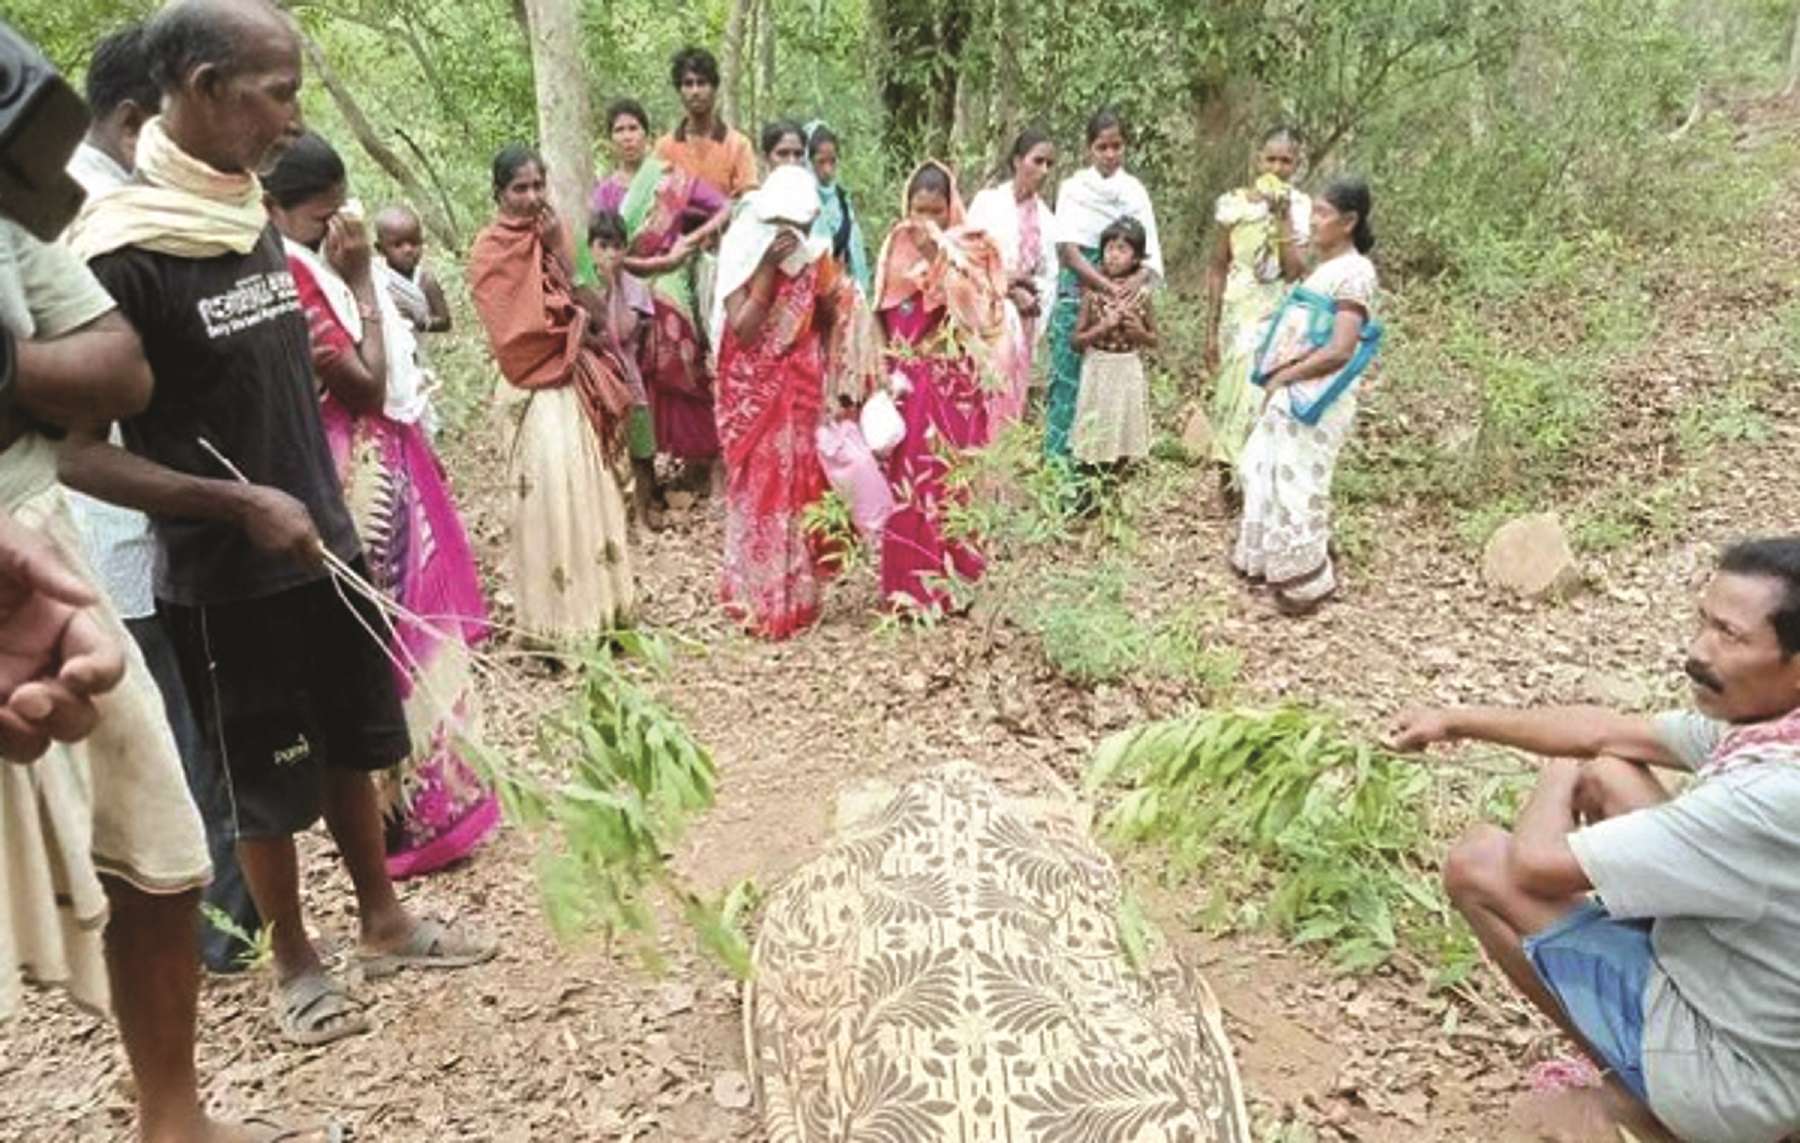 Wild Elephant killed two villagers in Jashpur Chhattisgarh